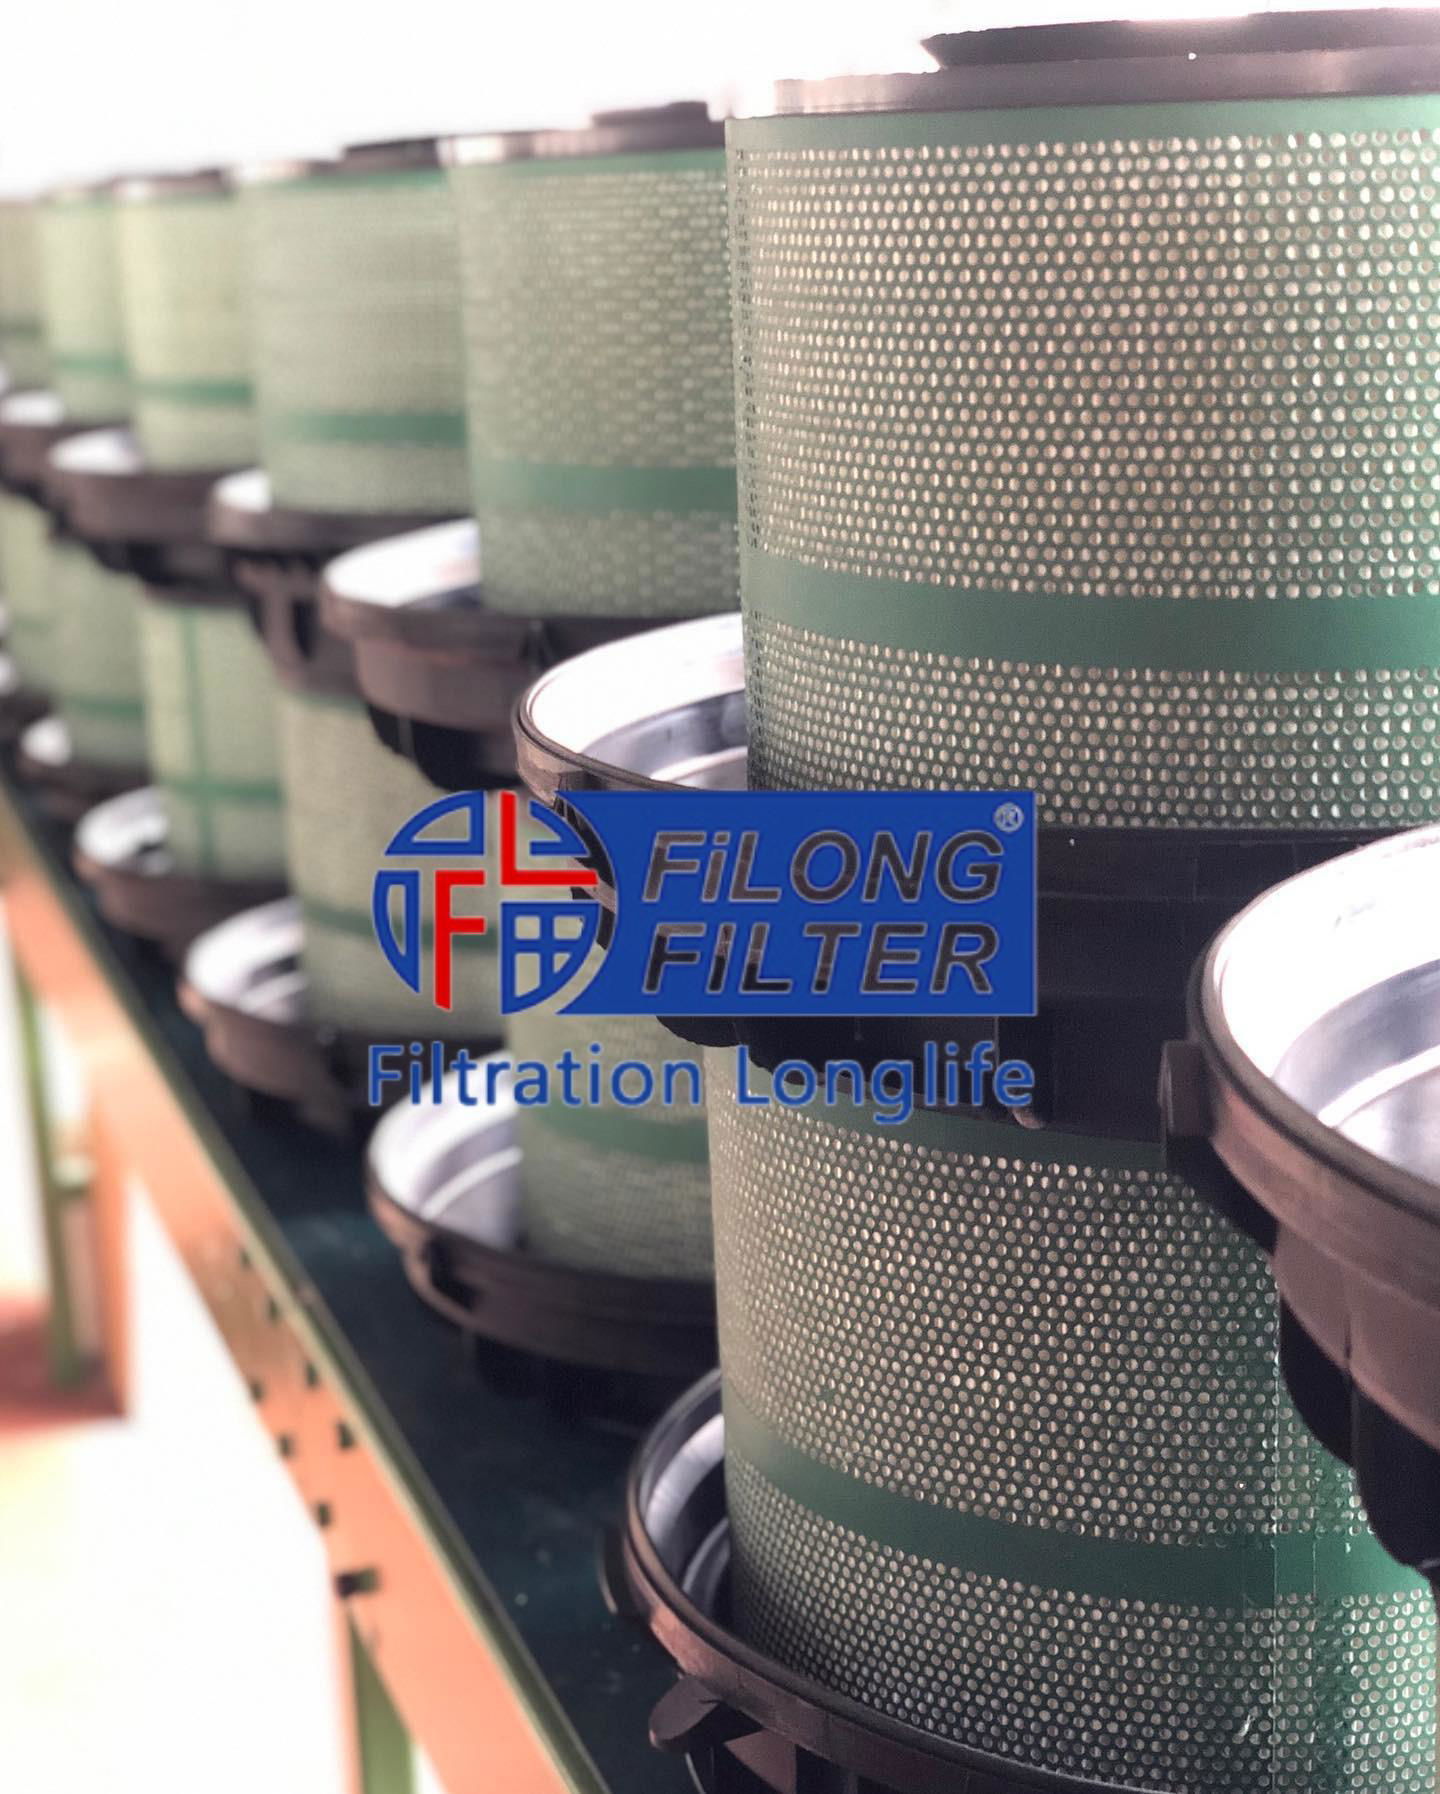 FILONG FILTER Manufacturers in china,Suppliers In China, FACTORY In China, AUTOMOTIVE FILTERS Manufacturers In China,AUTOMOBILE FILTERS Manufacturers In China ,Car filter Manufacturers In China oil filter Manufacturers in china,fuel filter Manufacturers in china,Air Filter Manufacturers in china ,cabin filter Manufacturers in china,hydraulic filter Manufacturers in china,iveco filter Manufacturers in china,volvo filter Manufacturers in china,caterpillar filter Manufacturers in china,man filter Manufacturers in china,jcb filter Manufacturers in china,john deere filter Manufacturers in china,scania filter Manufacturers in china,mercedes benz filter Manufacturers in china,daf filter Manufacturers in china,perkins filter Manufacturers in china,renault filter Manufacturers in china,hitachi filter Manufacturers in china,deutz filter Manufacturers in china,cummins filter Manufacturers in china,howo filter Manufacturers in china,weichai filter Manufacturers in china,thermo king filter Manufacturers in china,komatsu f